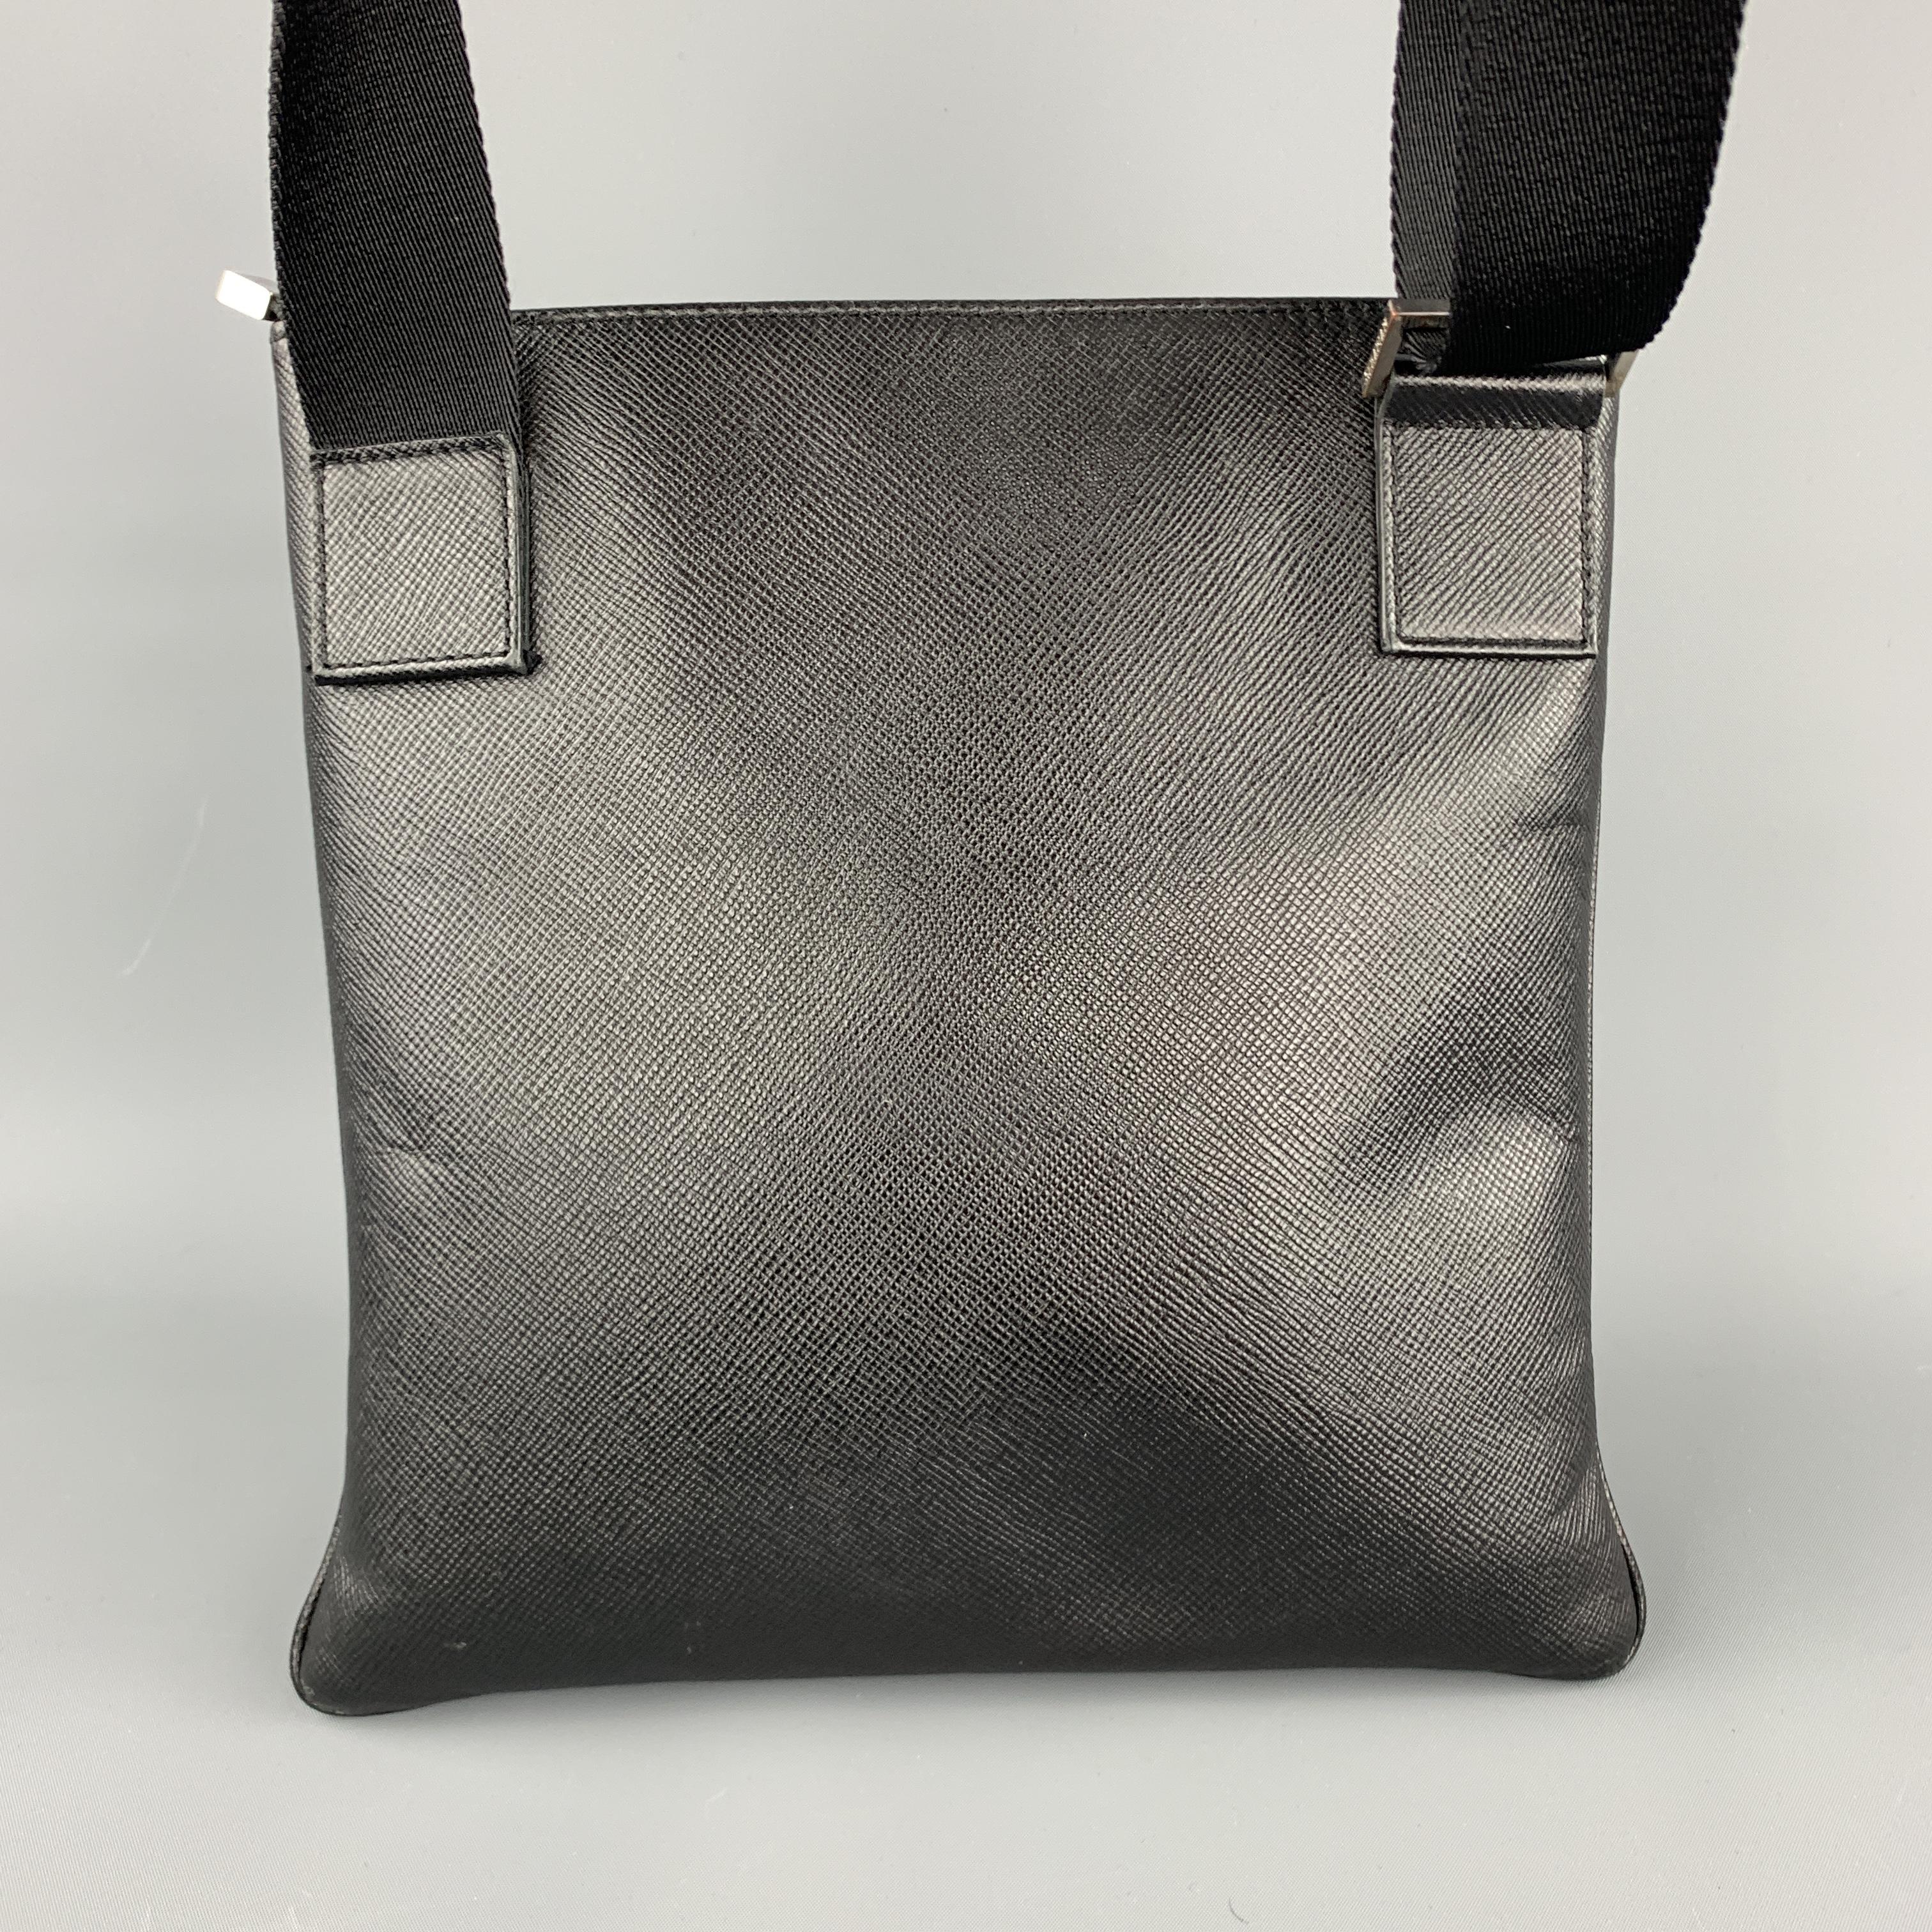 SERAPIAN Solid Black Saffiano Textured Leather Crossbody Bag 3